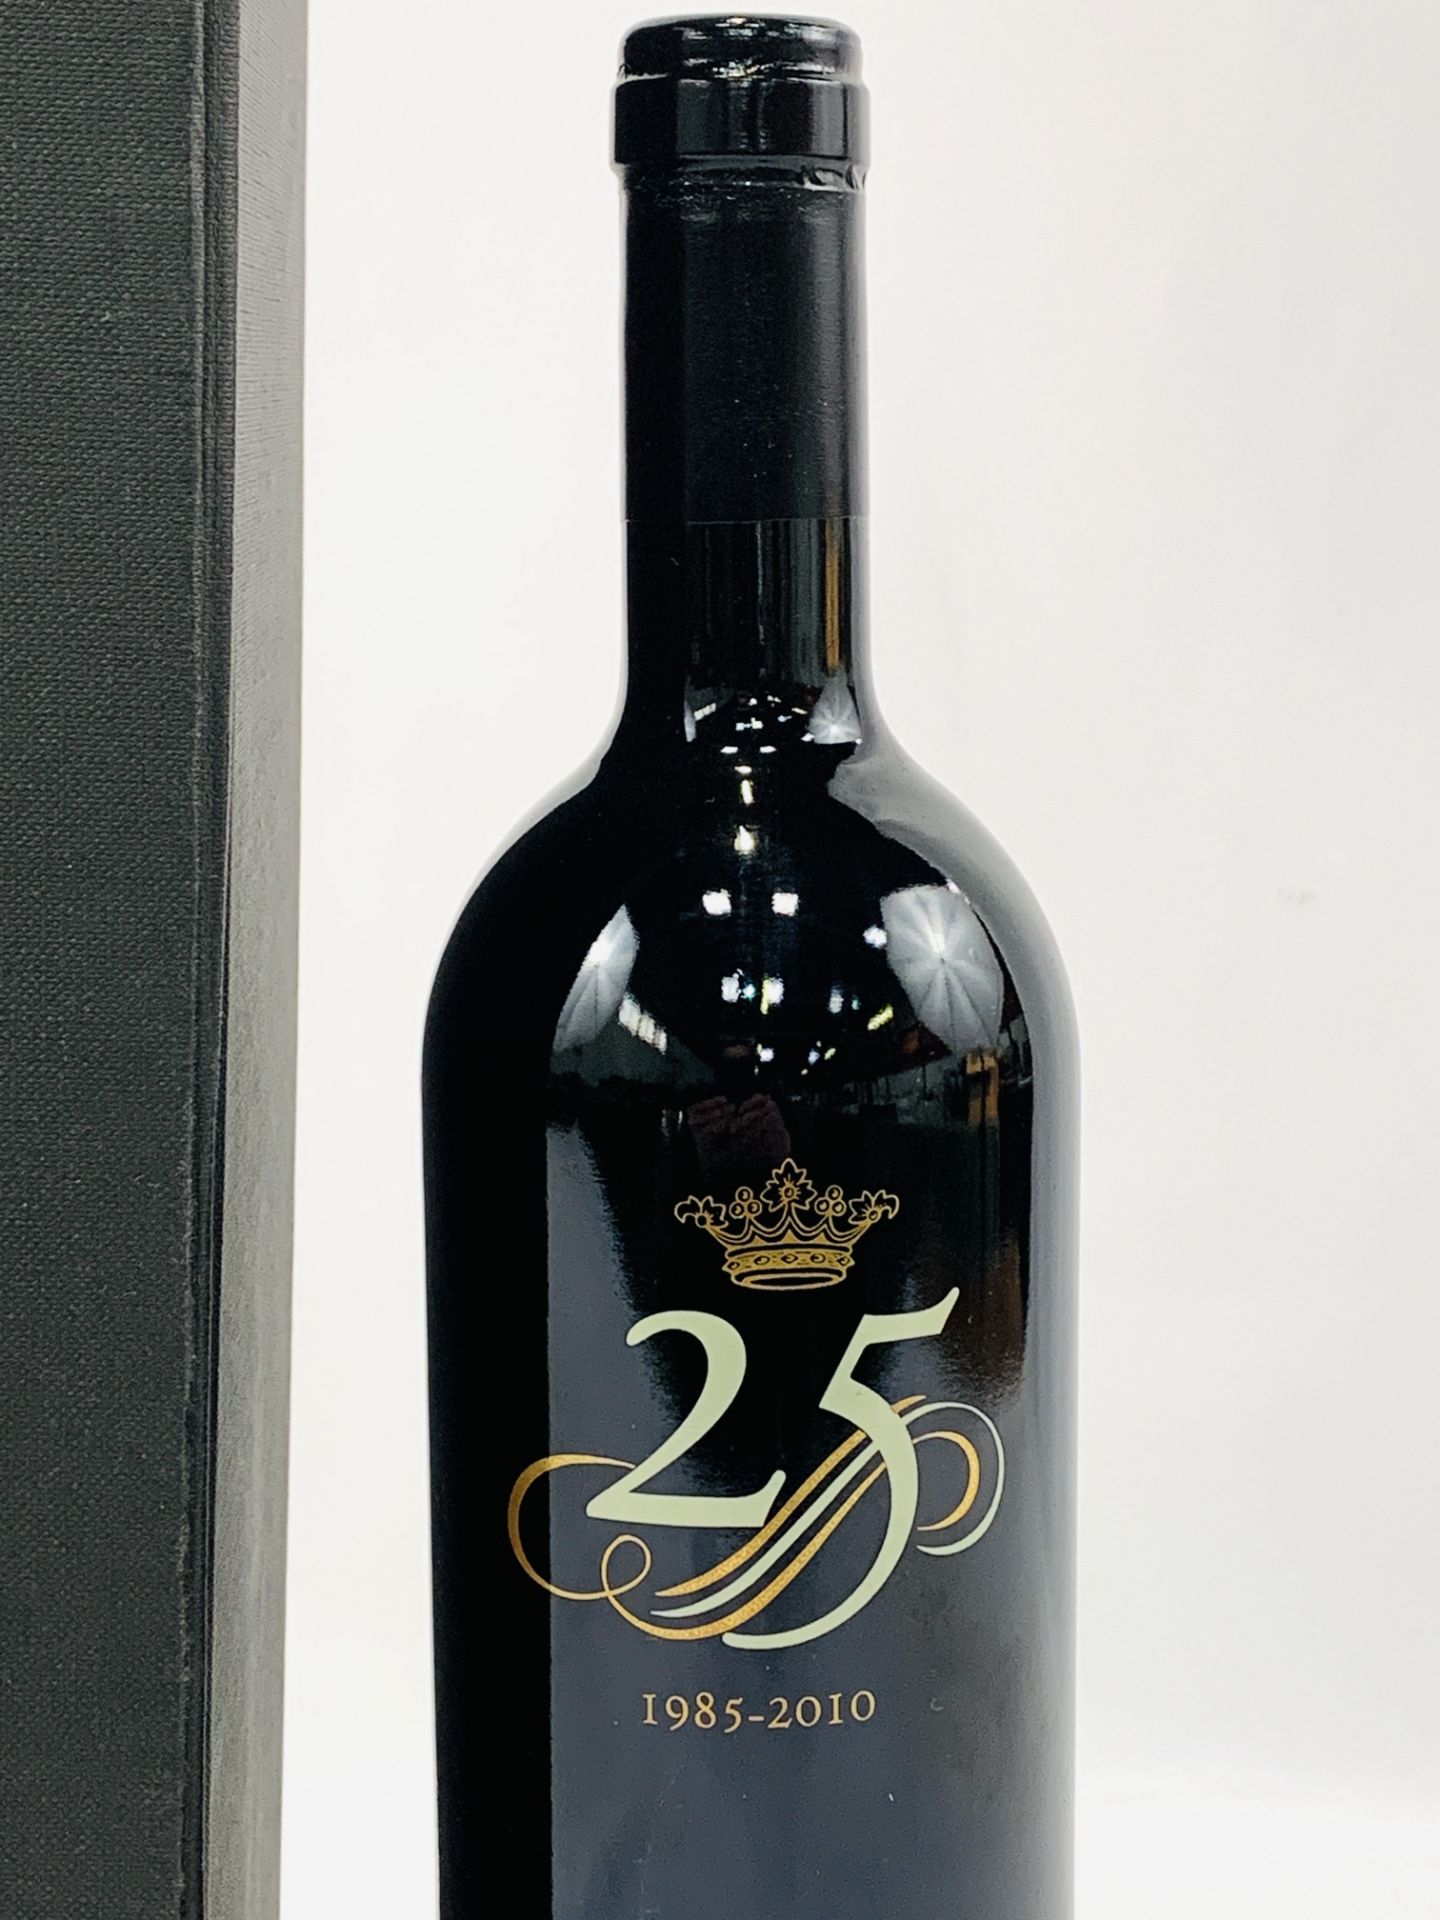 75cl bottle of 2010 Ornellaia Bolgheri Superiore - Image 3 of 4